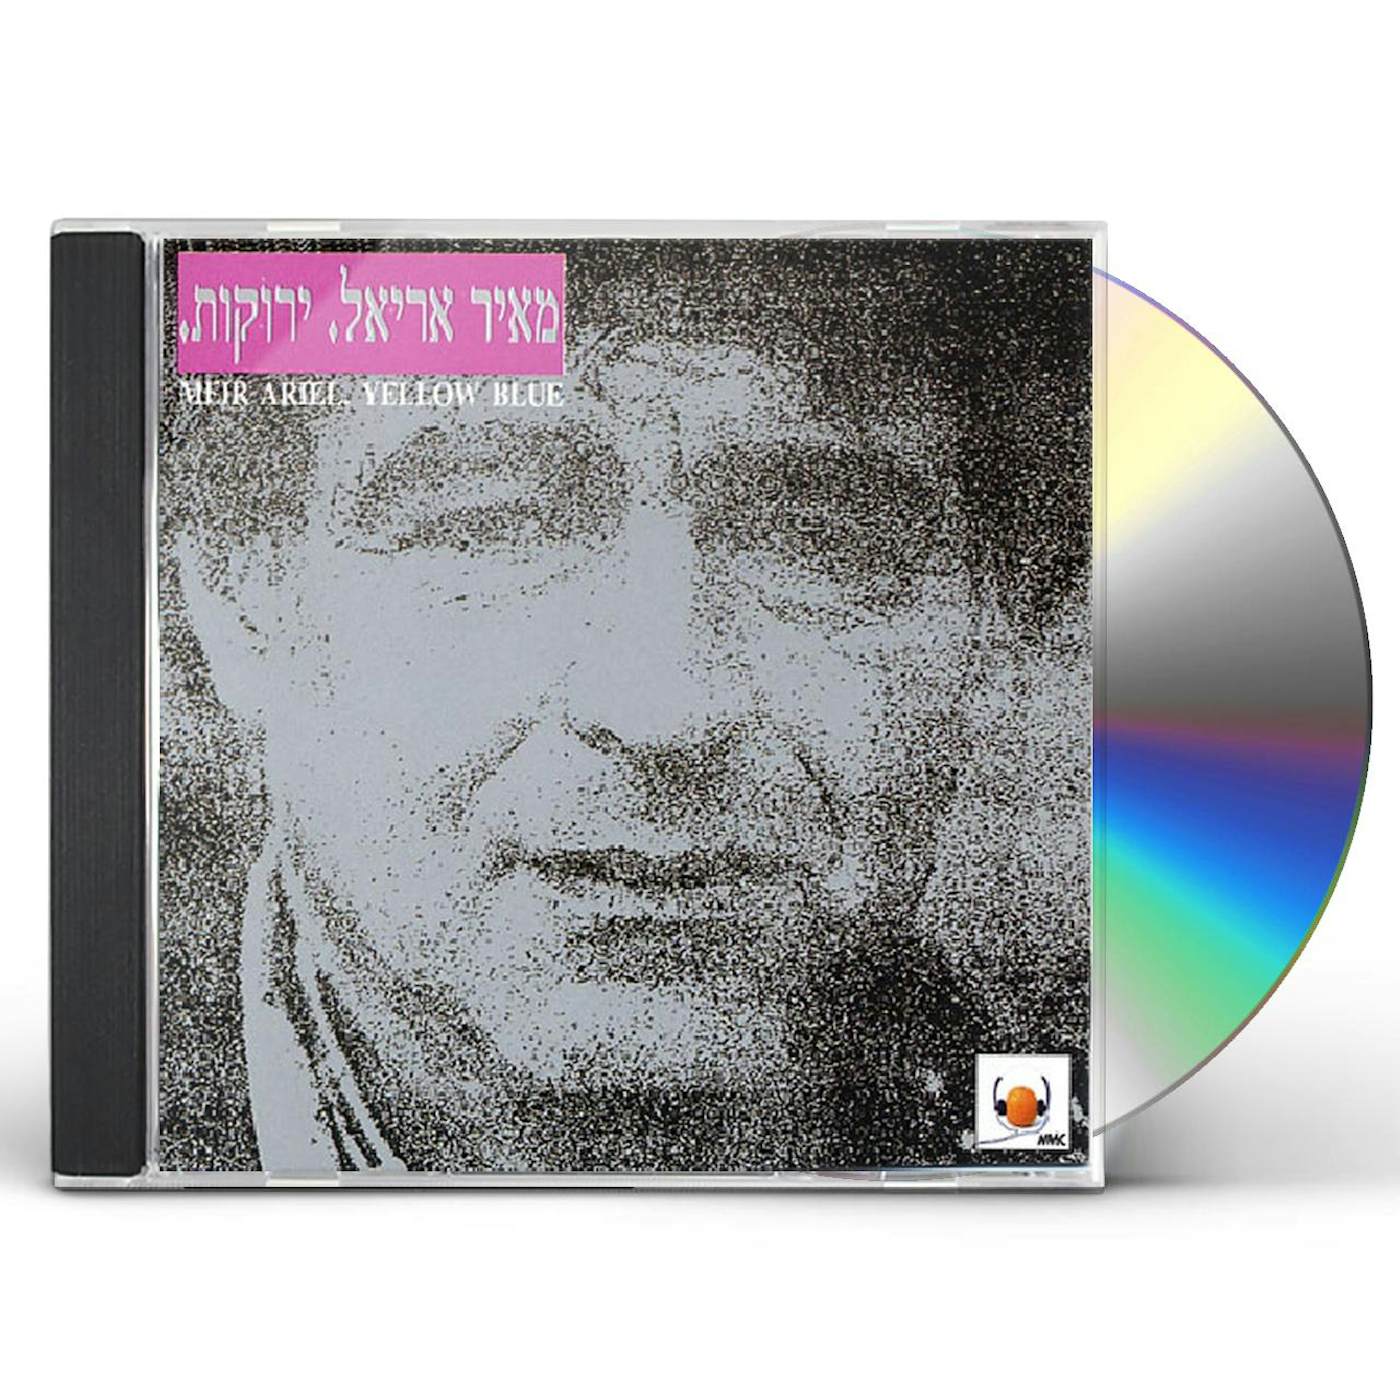 Meir Ariel YELLOW BLUE CD